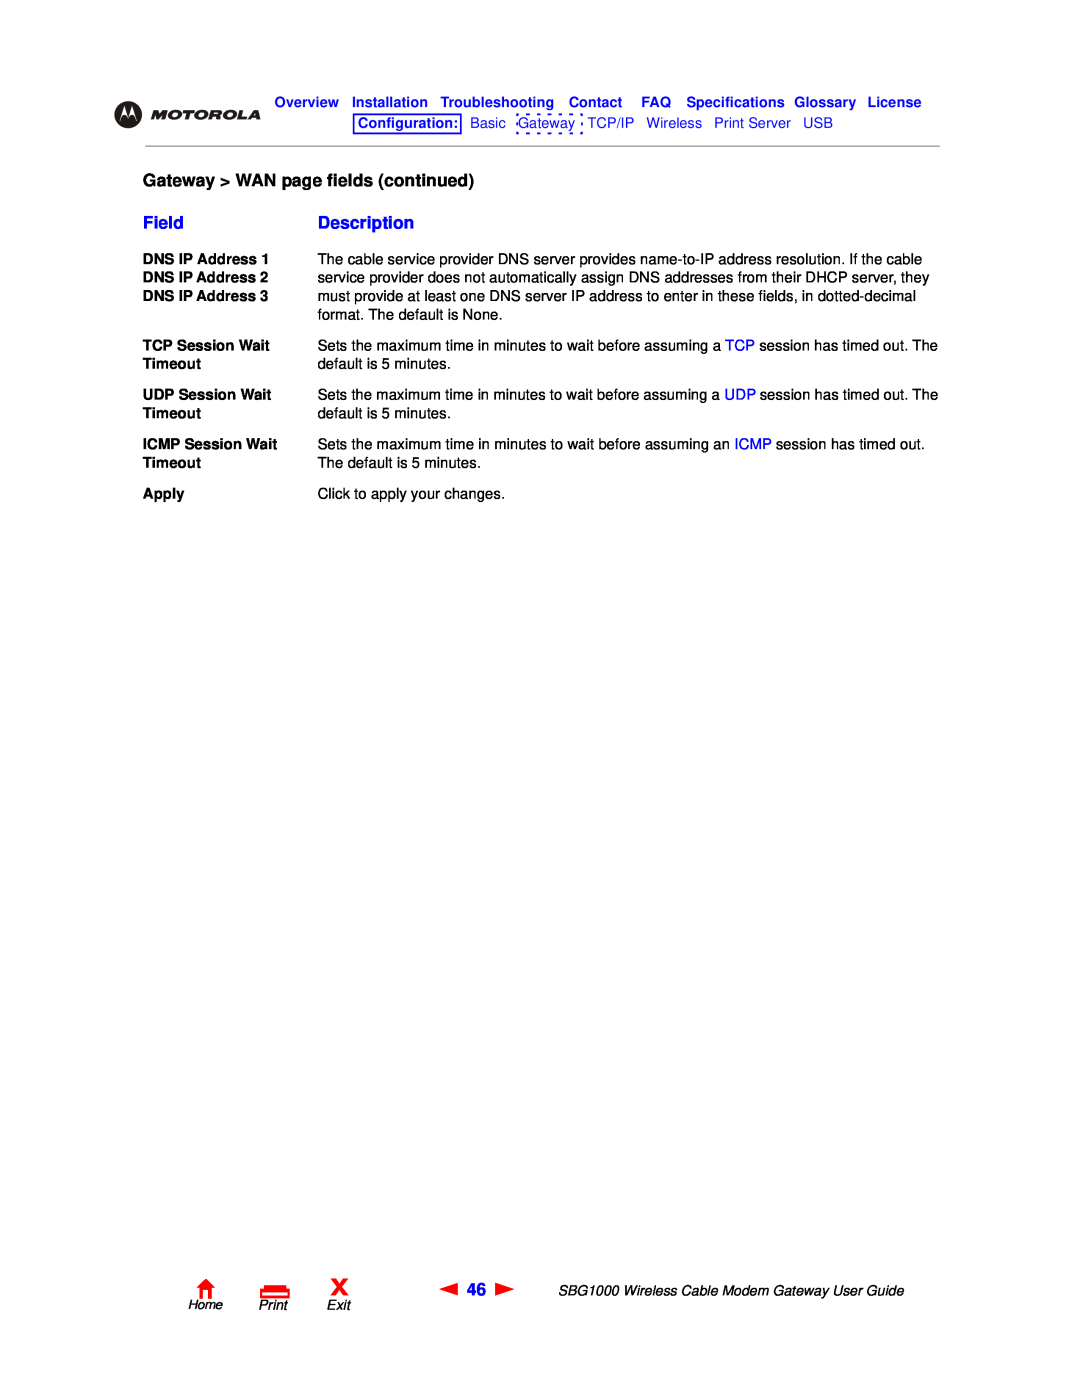 Motorola SBG1000 manual Gateway WAN page fields continued, Field, Description, Home Print Exit 